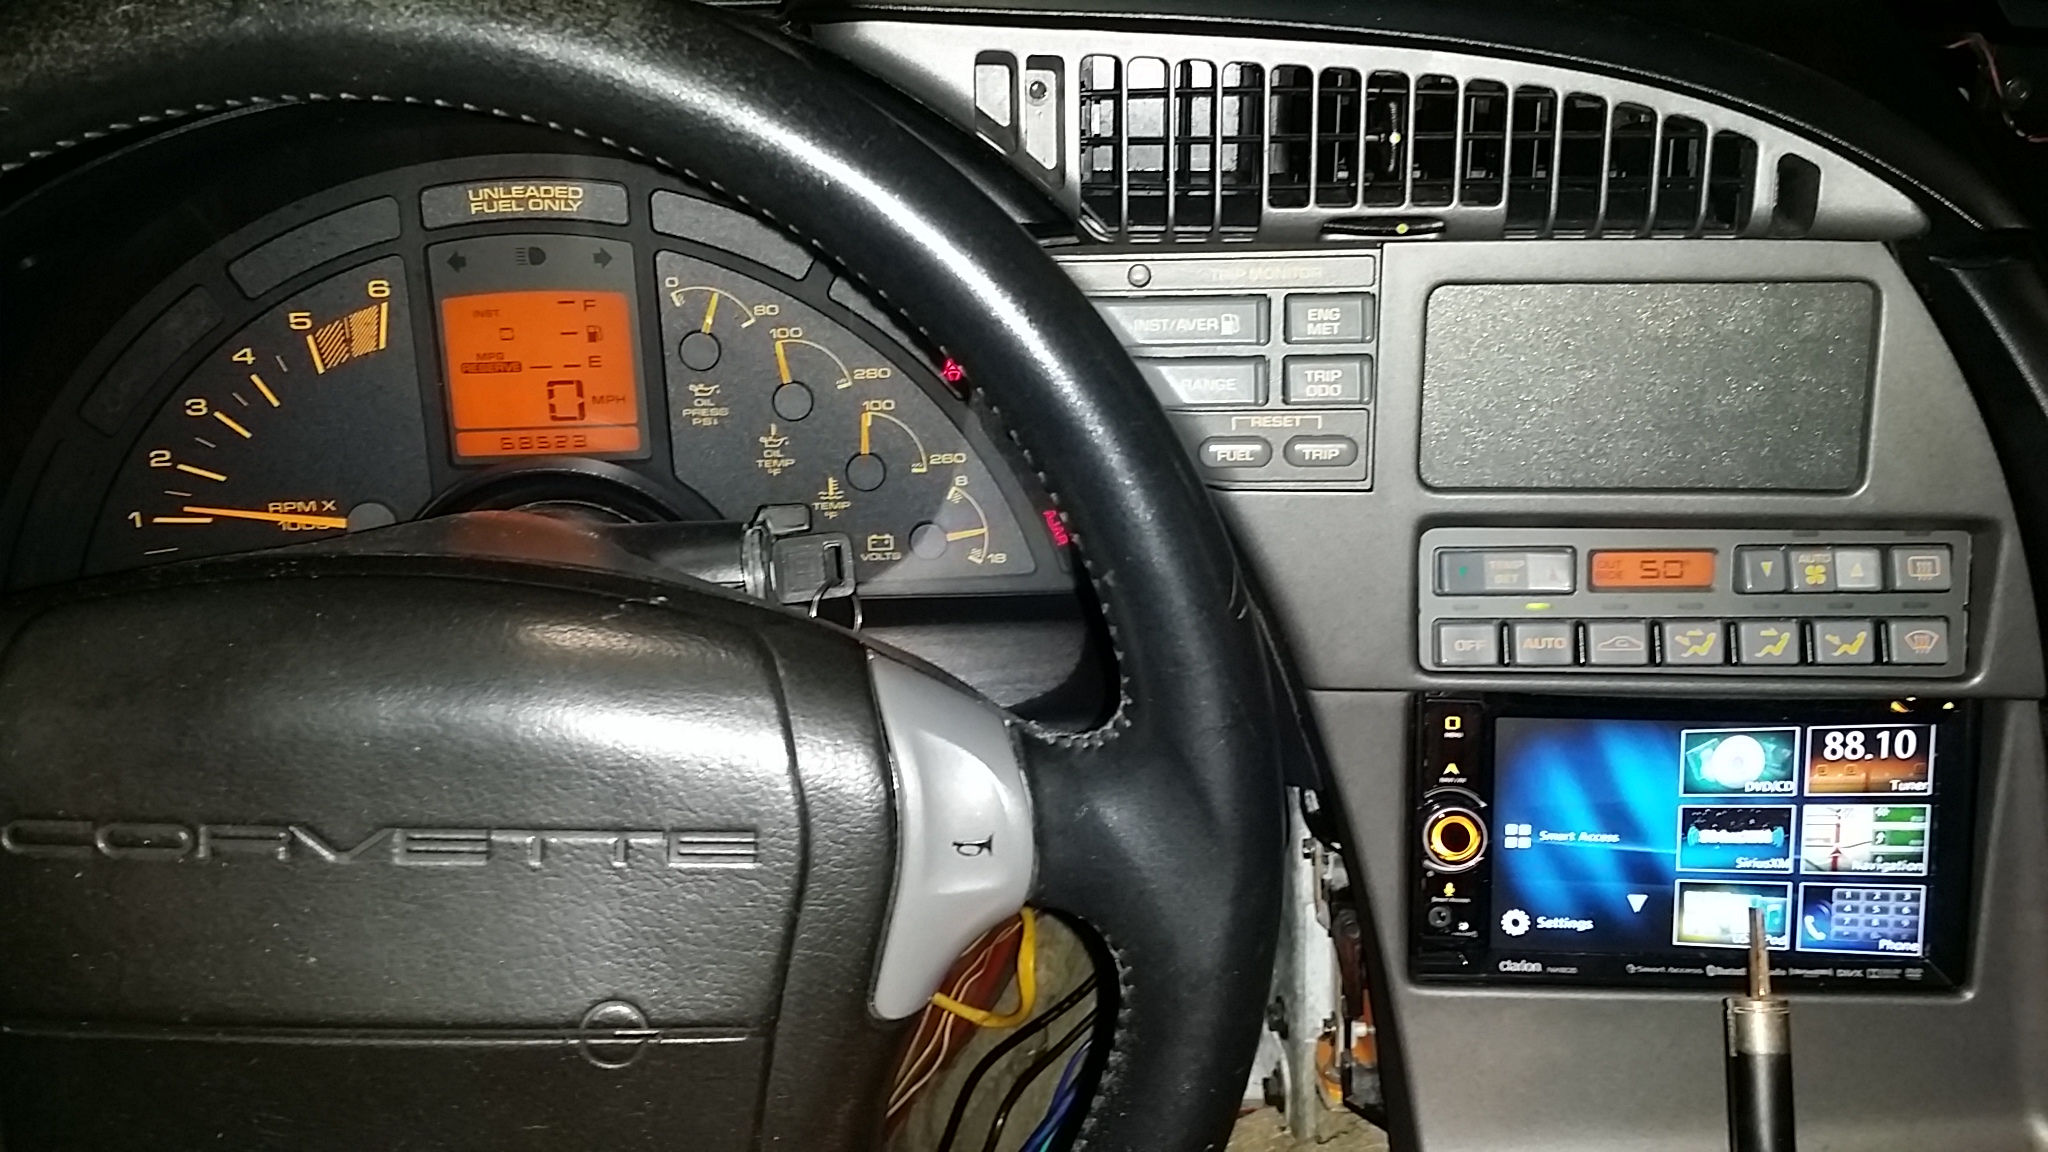 Double Din Radio Install Completed Finally. - CorvetteForum - Chevrolet